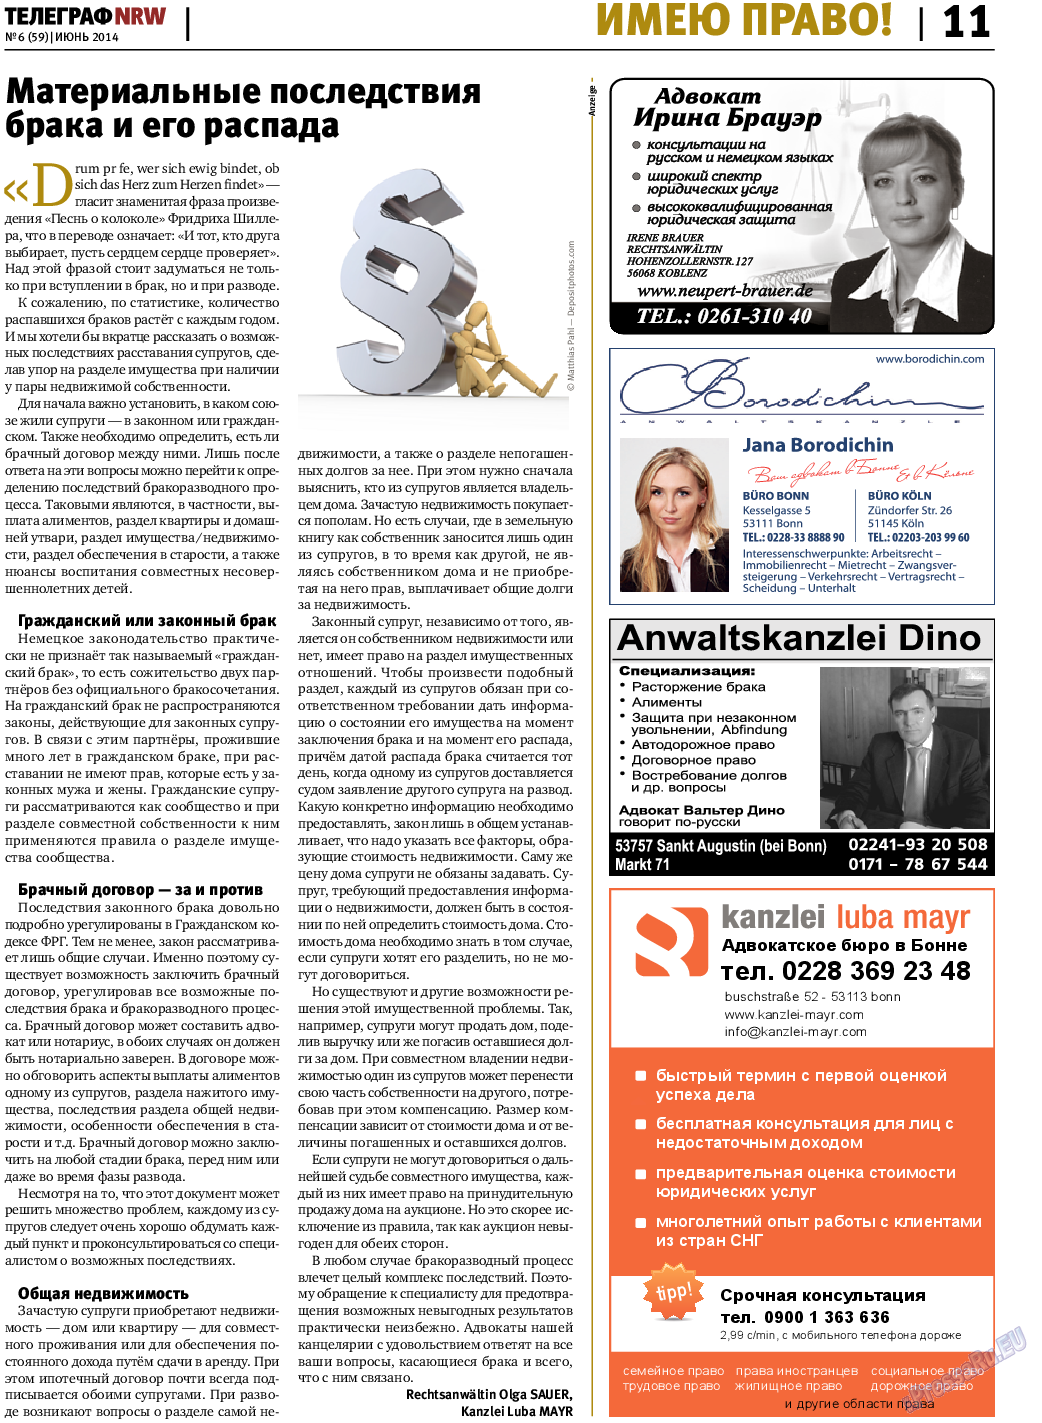 Телеграф NRW, газета. 2014 №6 стр.11